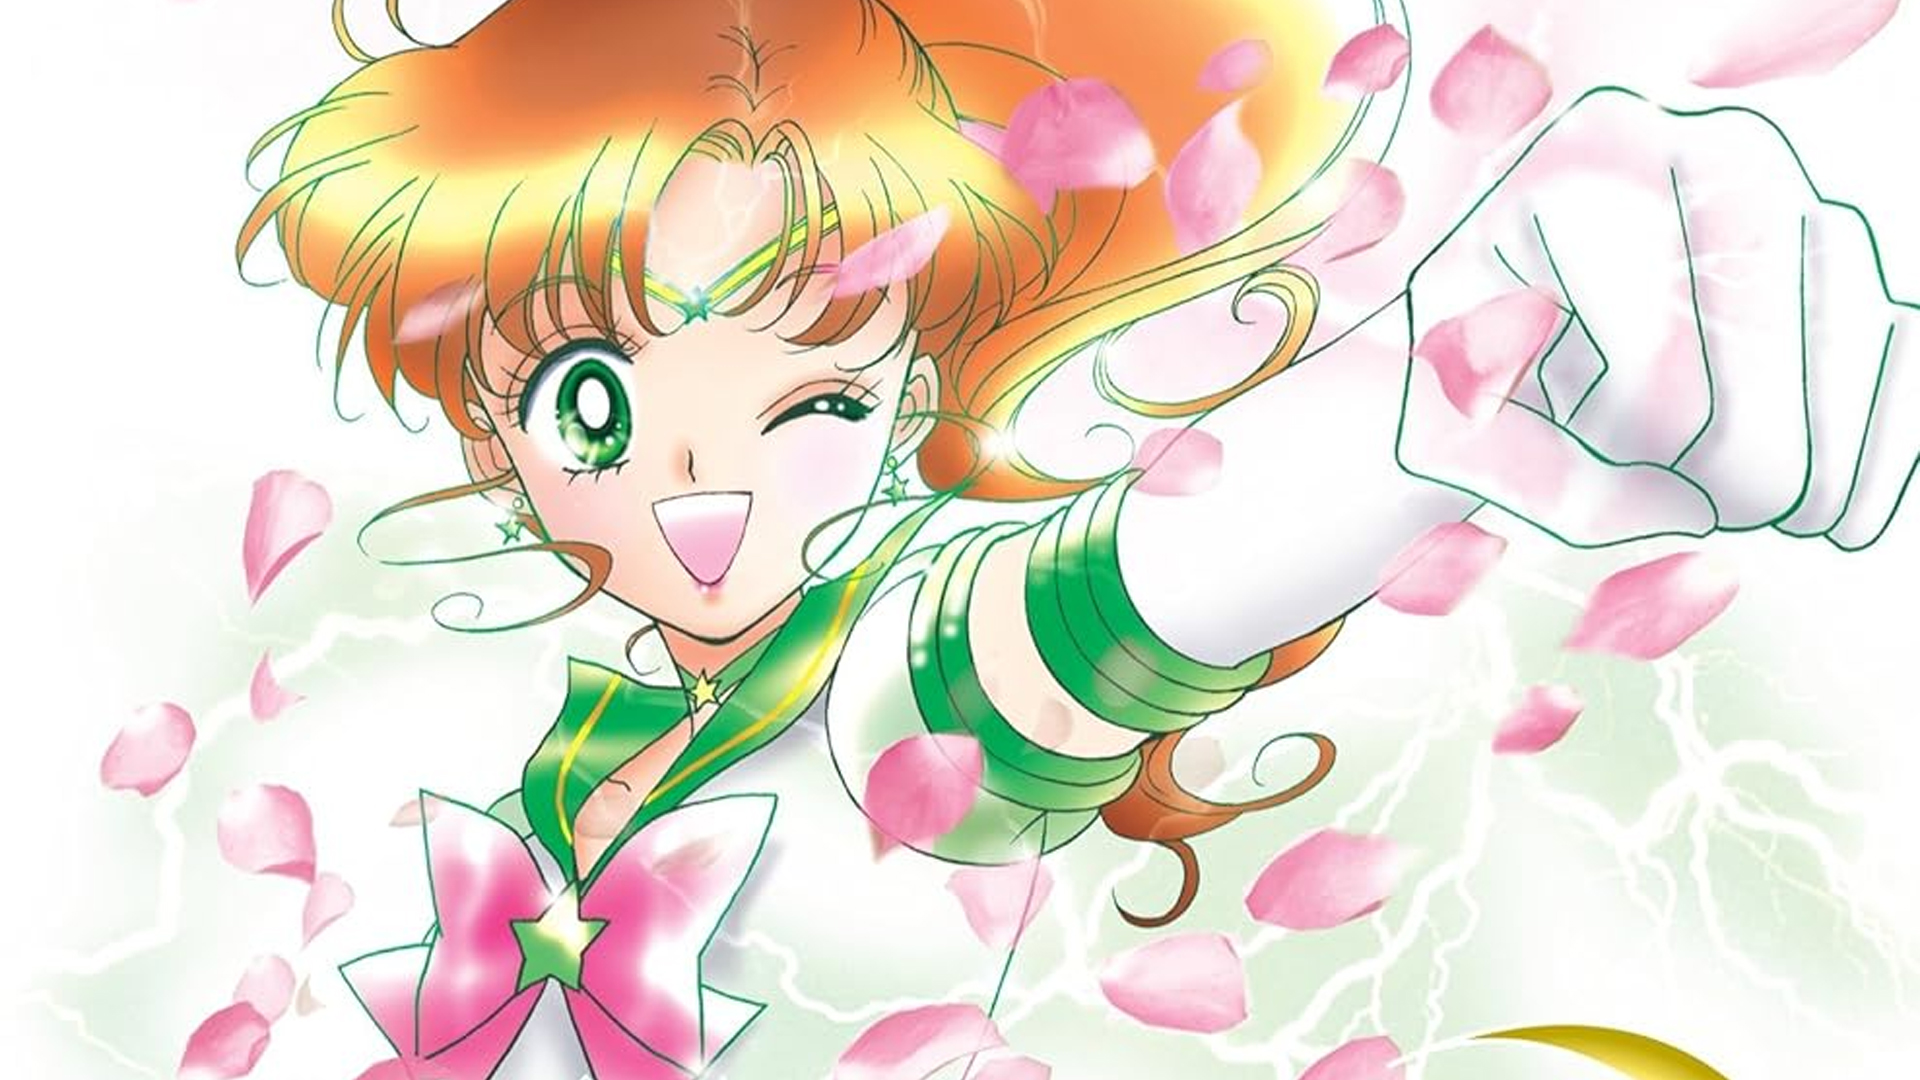 Cover artwork for Volume 4 of Kodansha's Third Generation Sailor Moon manga release featuring Sailor Jupiter.